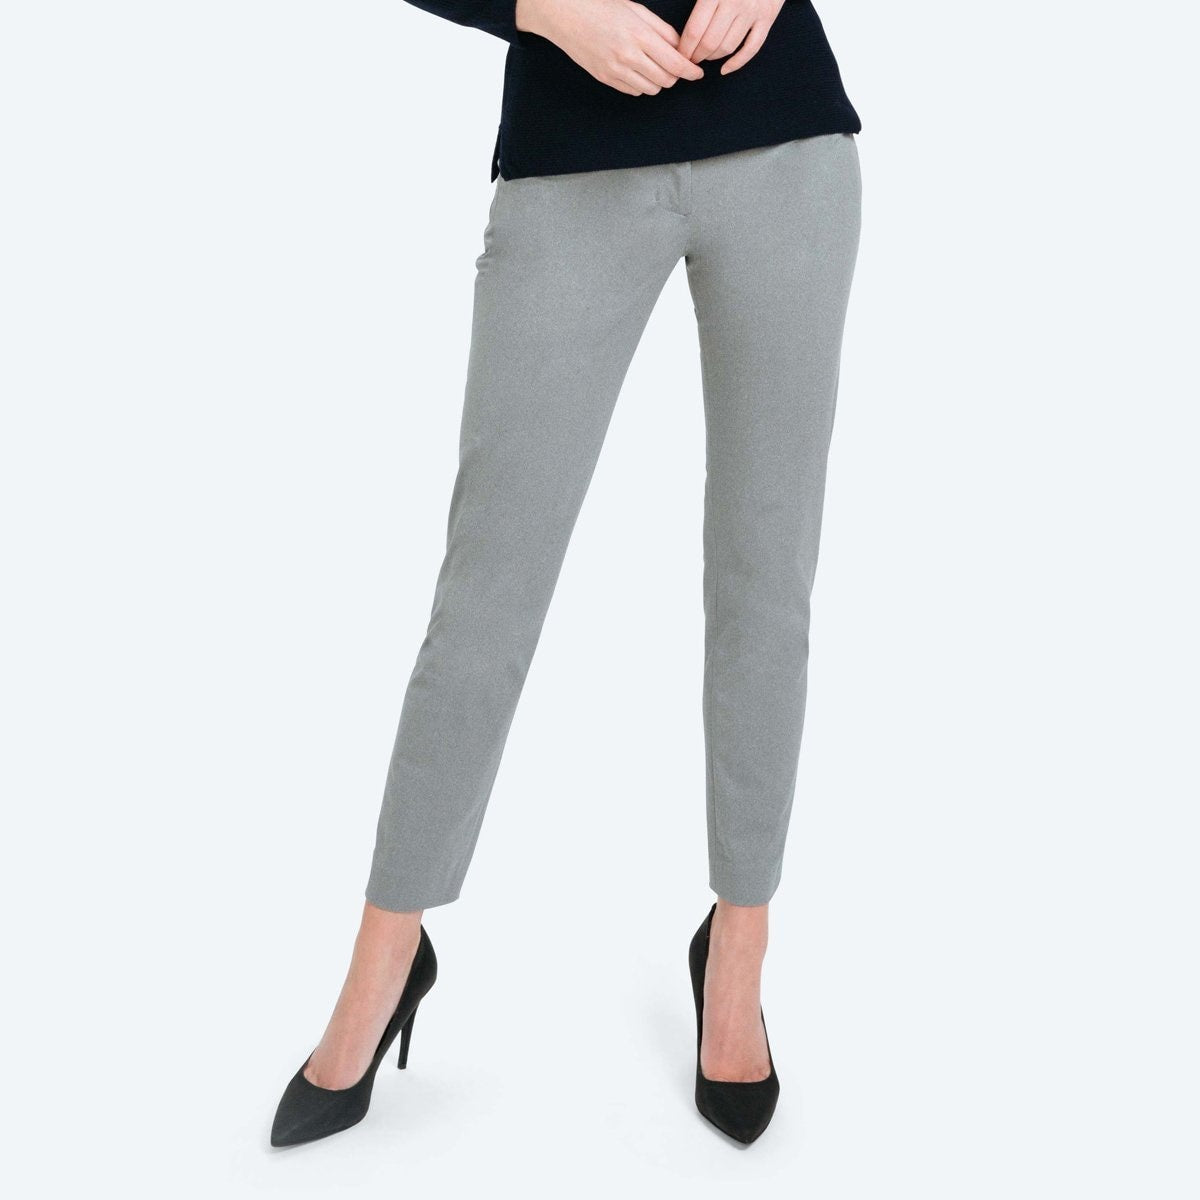 Women's Slim Kinetic Pants - Grey Heather - Original Fit - $74.00 ...